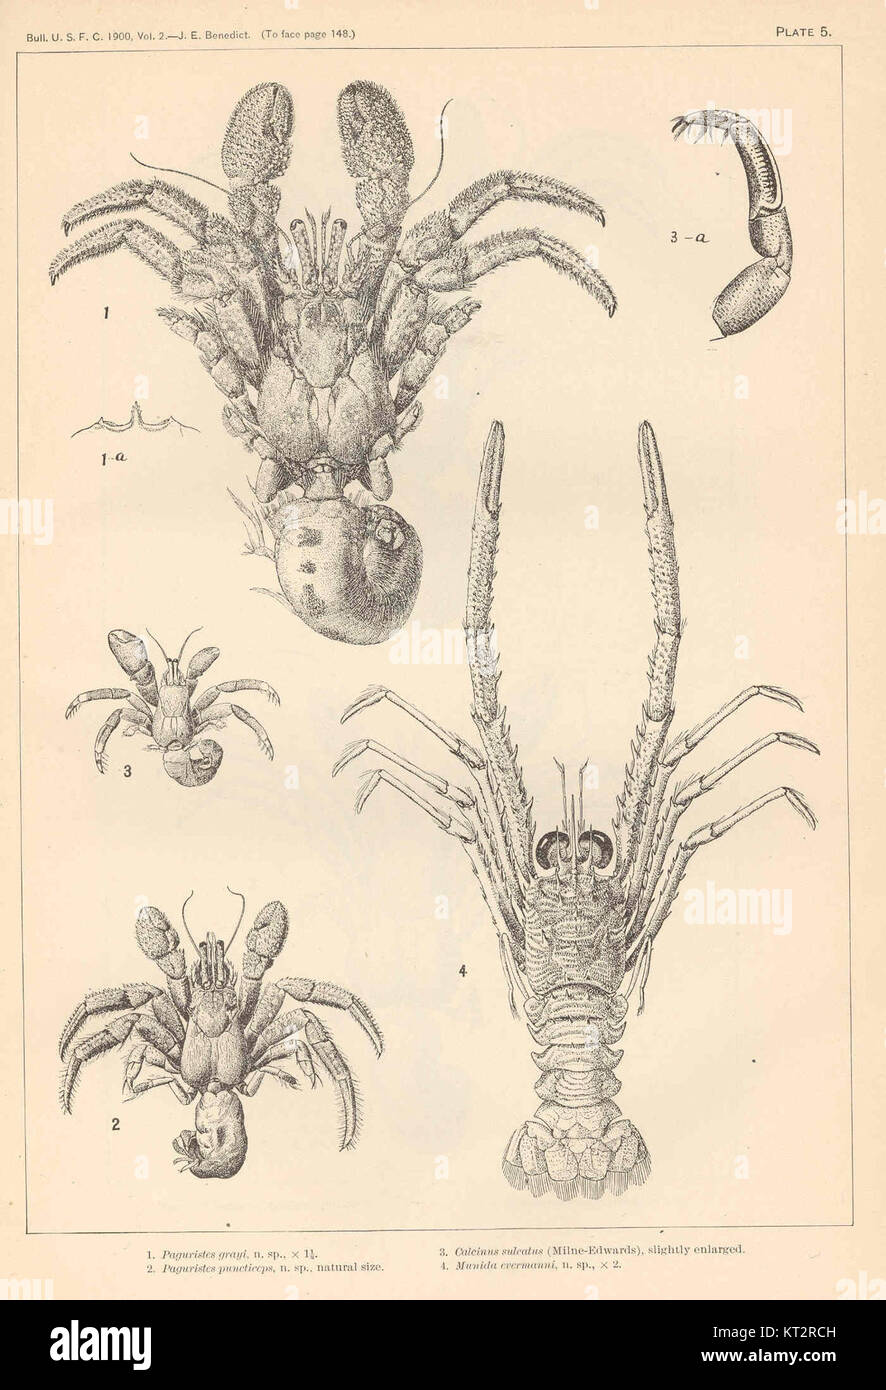 38179 Paguristes grayi (1); Paguristes puncticeps (2); Calcinus sulcatus (Milne-Edwards (3); Munida evermanni (4) Stock Photo